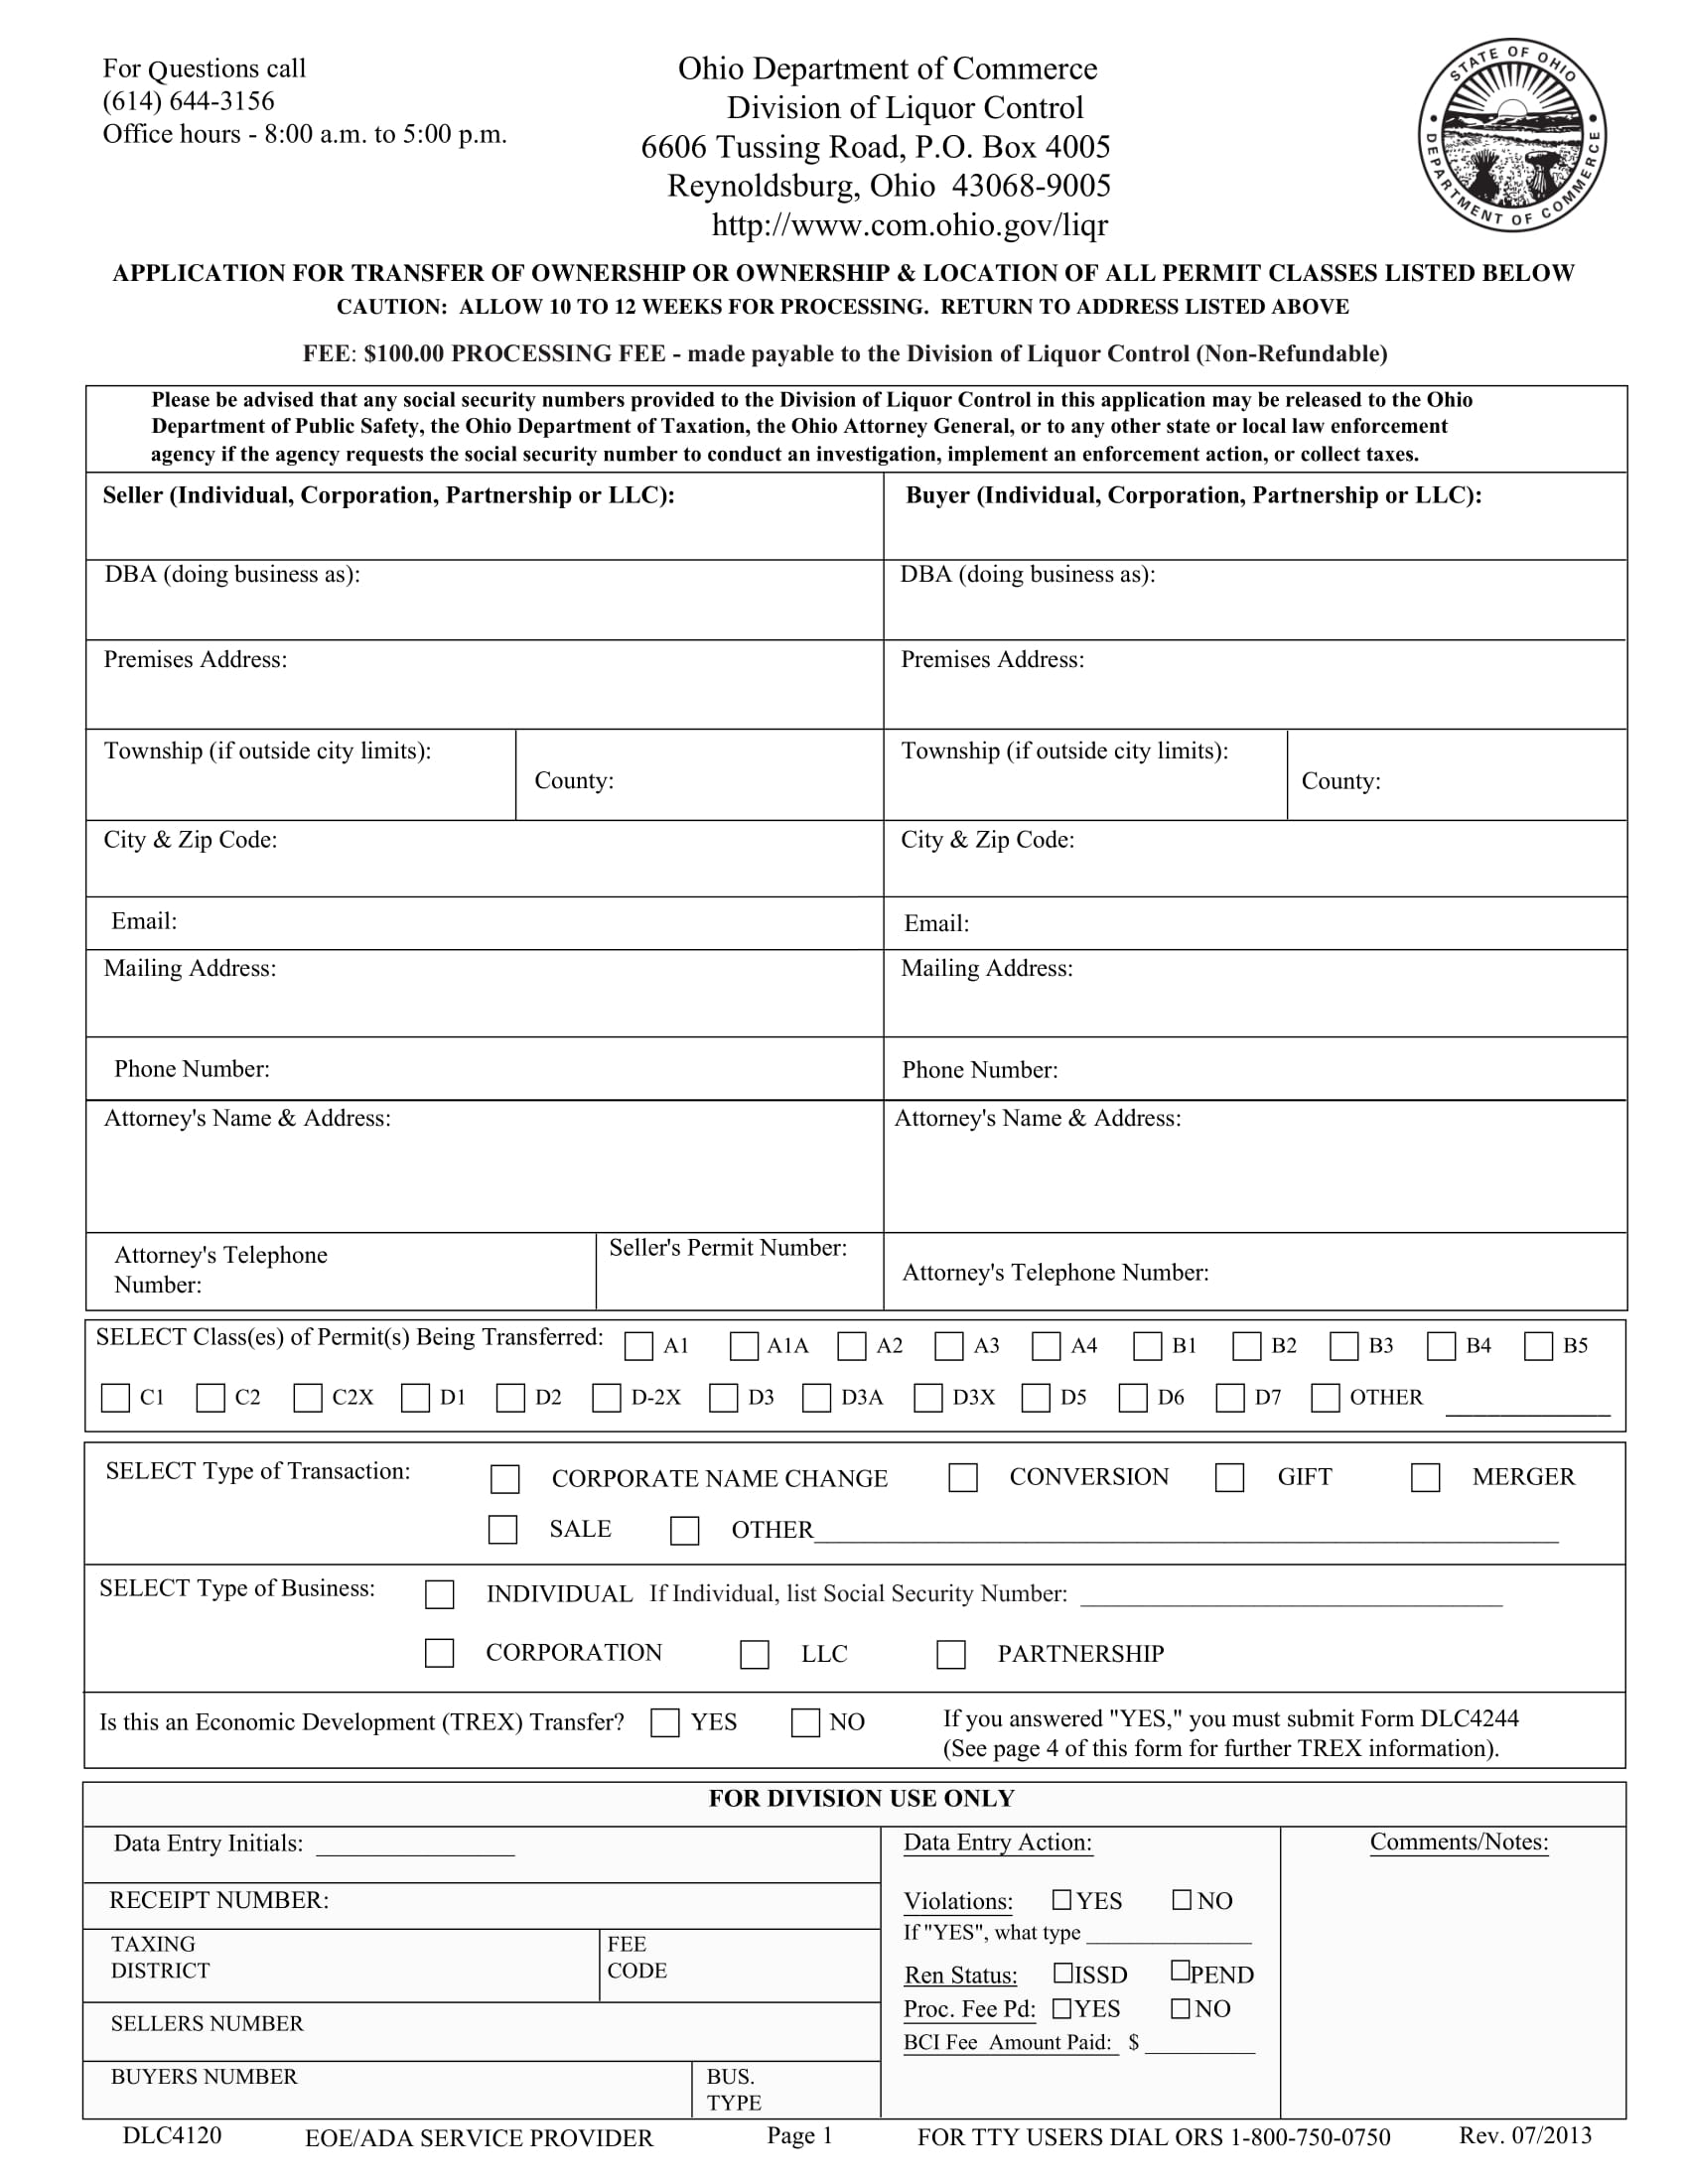 restaurant transfer of ownership application form sample 3